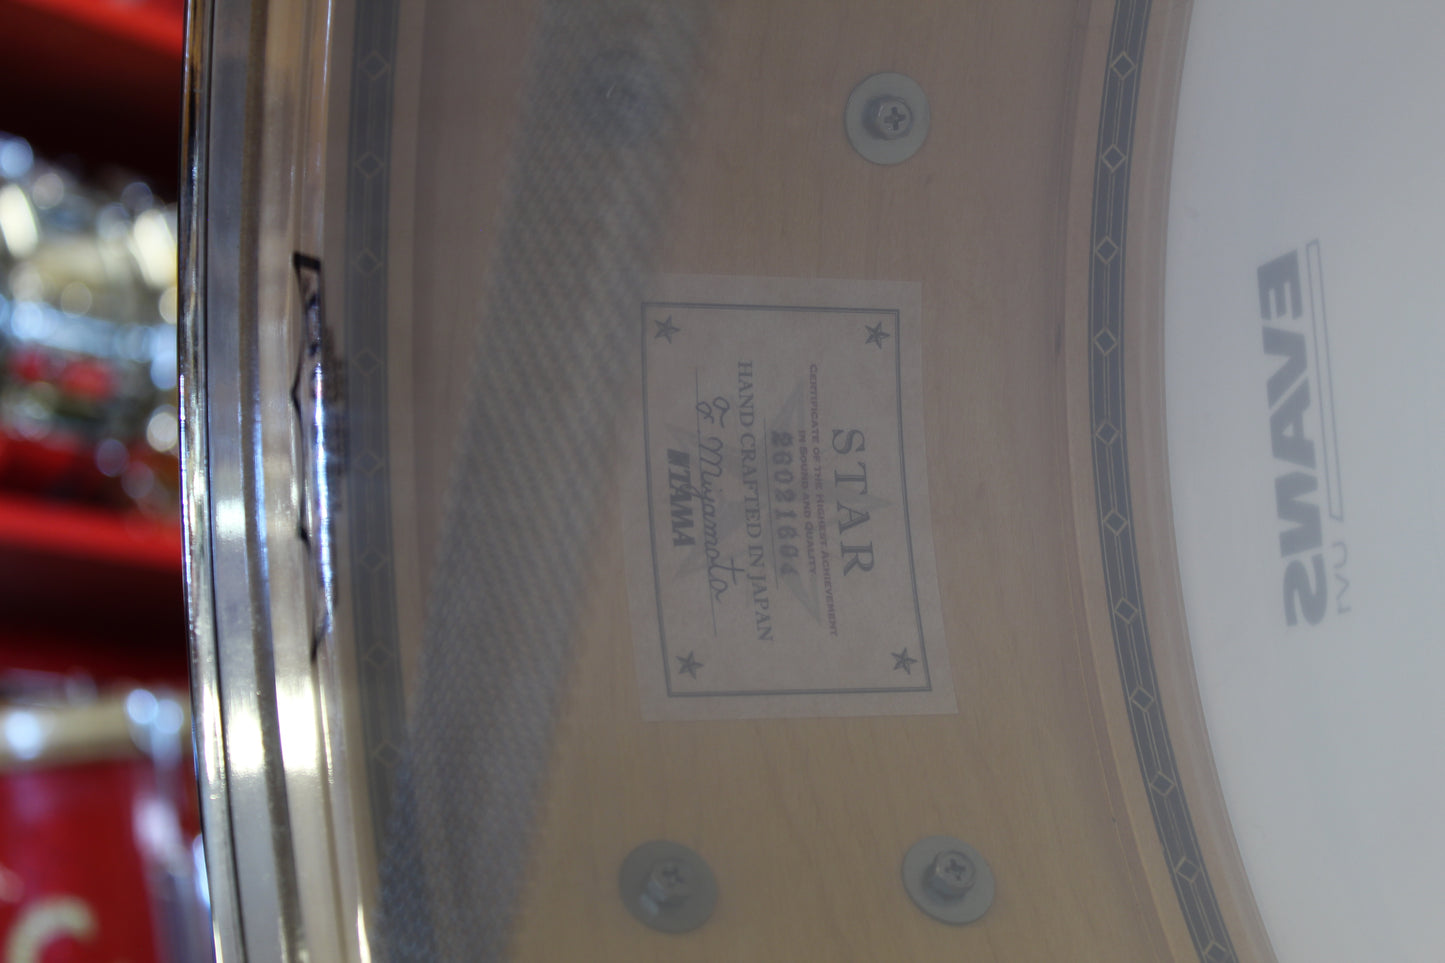 Tama Star Maple Snare Drum 6.5"x14" in Satin Antique Brown